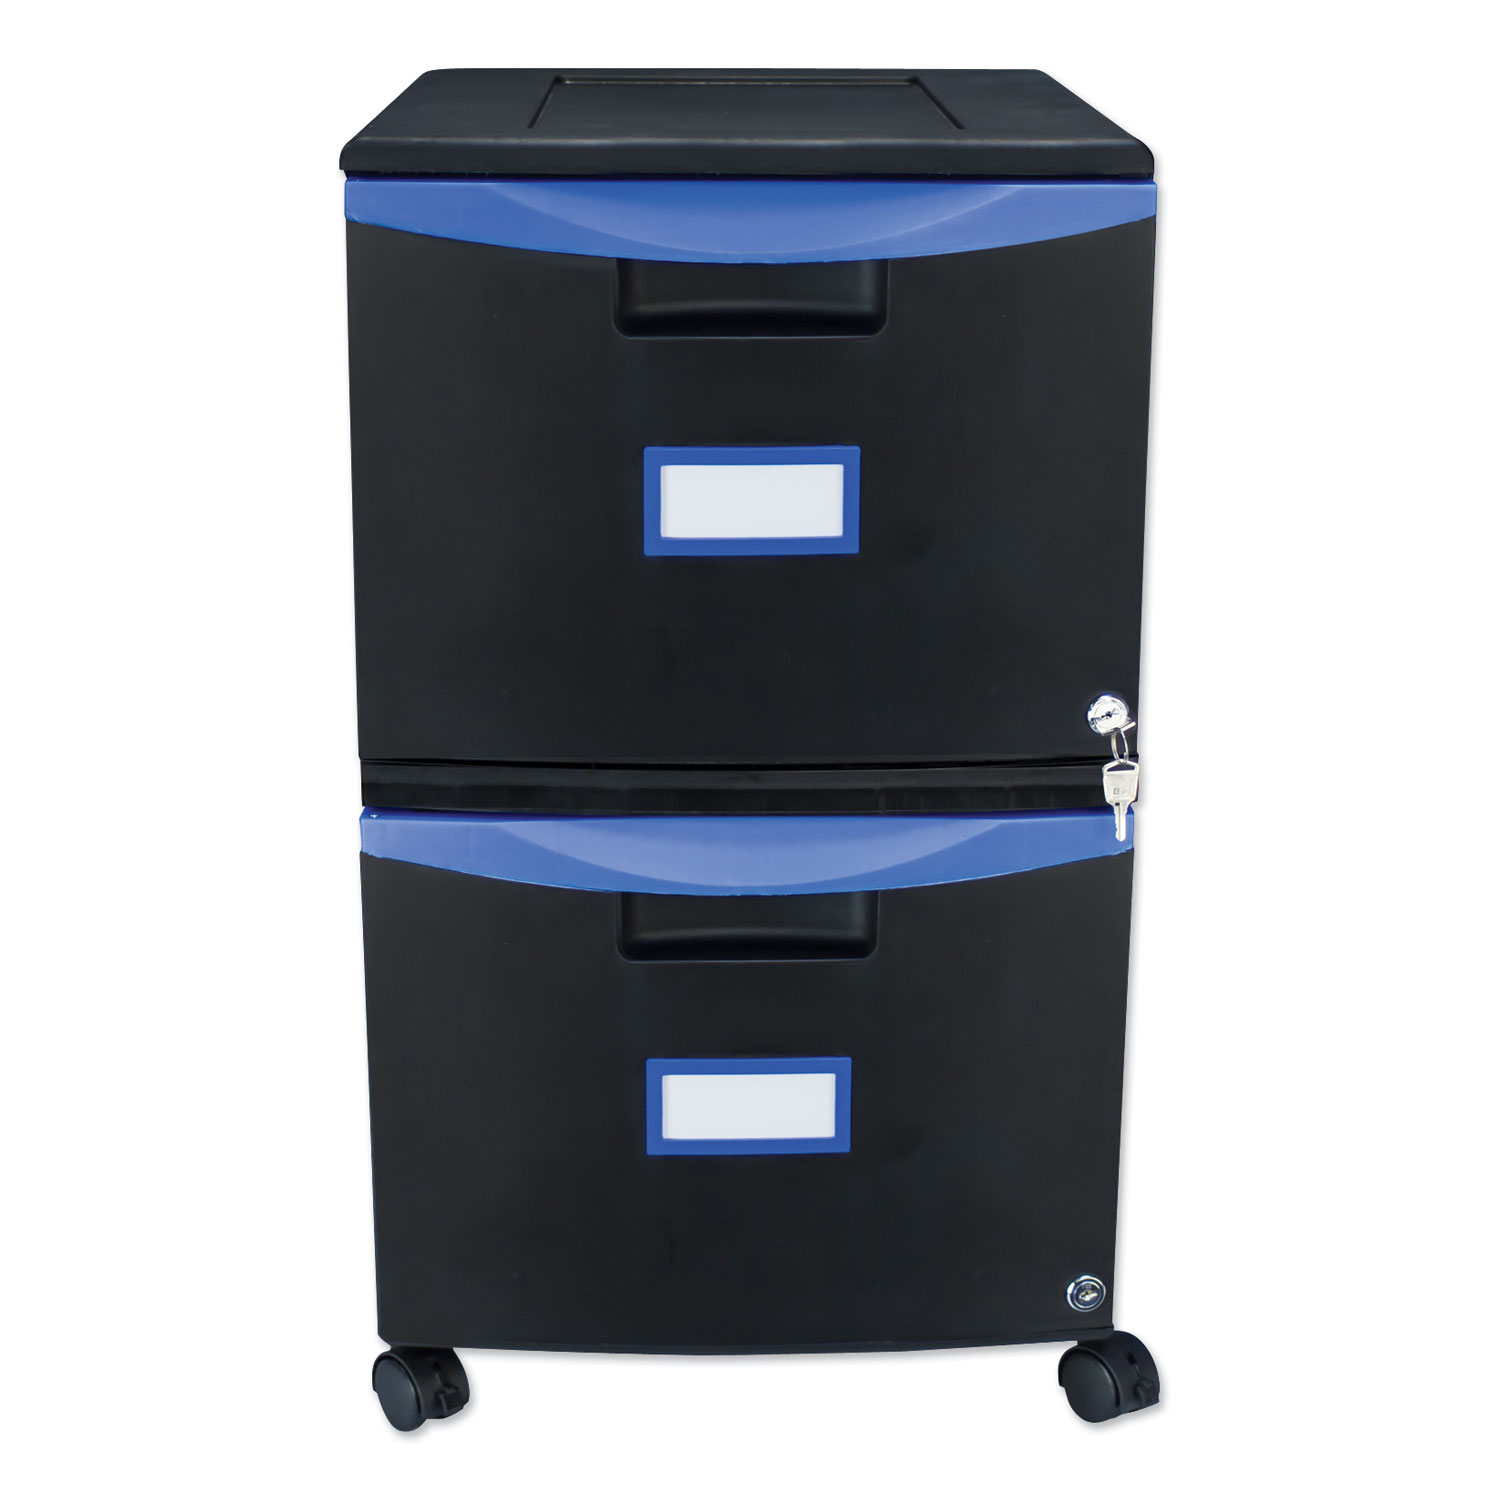  Storex 61314U01C Two-Drawer Mobile Filing Cabinet, 14.75w x 18.25d x 26h, Black/Blue (STX61314U01C) 